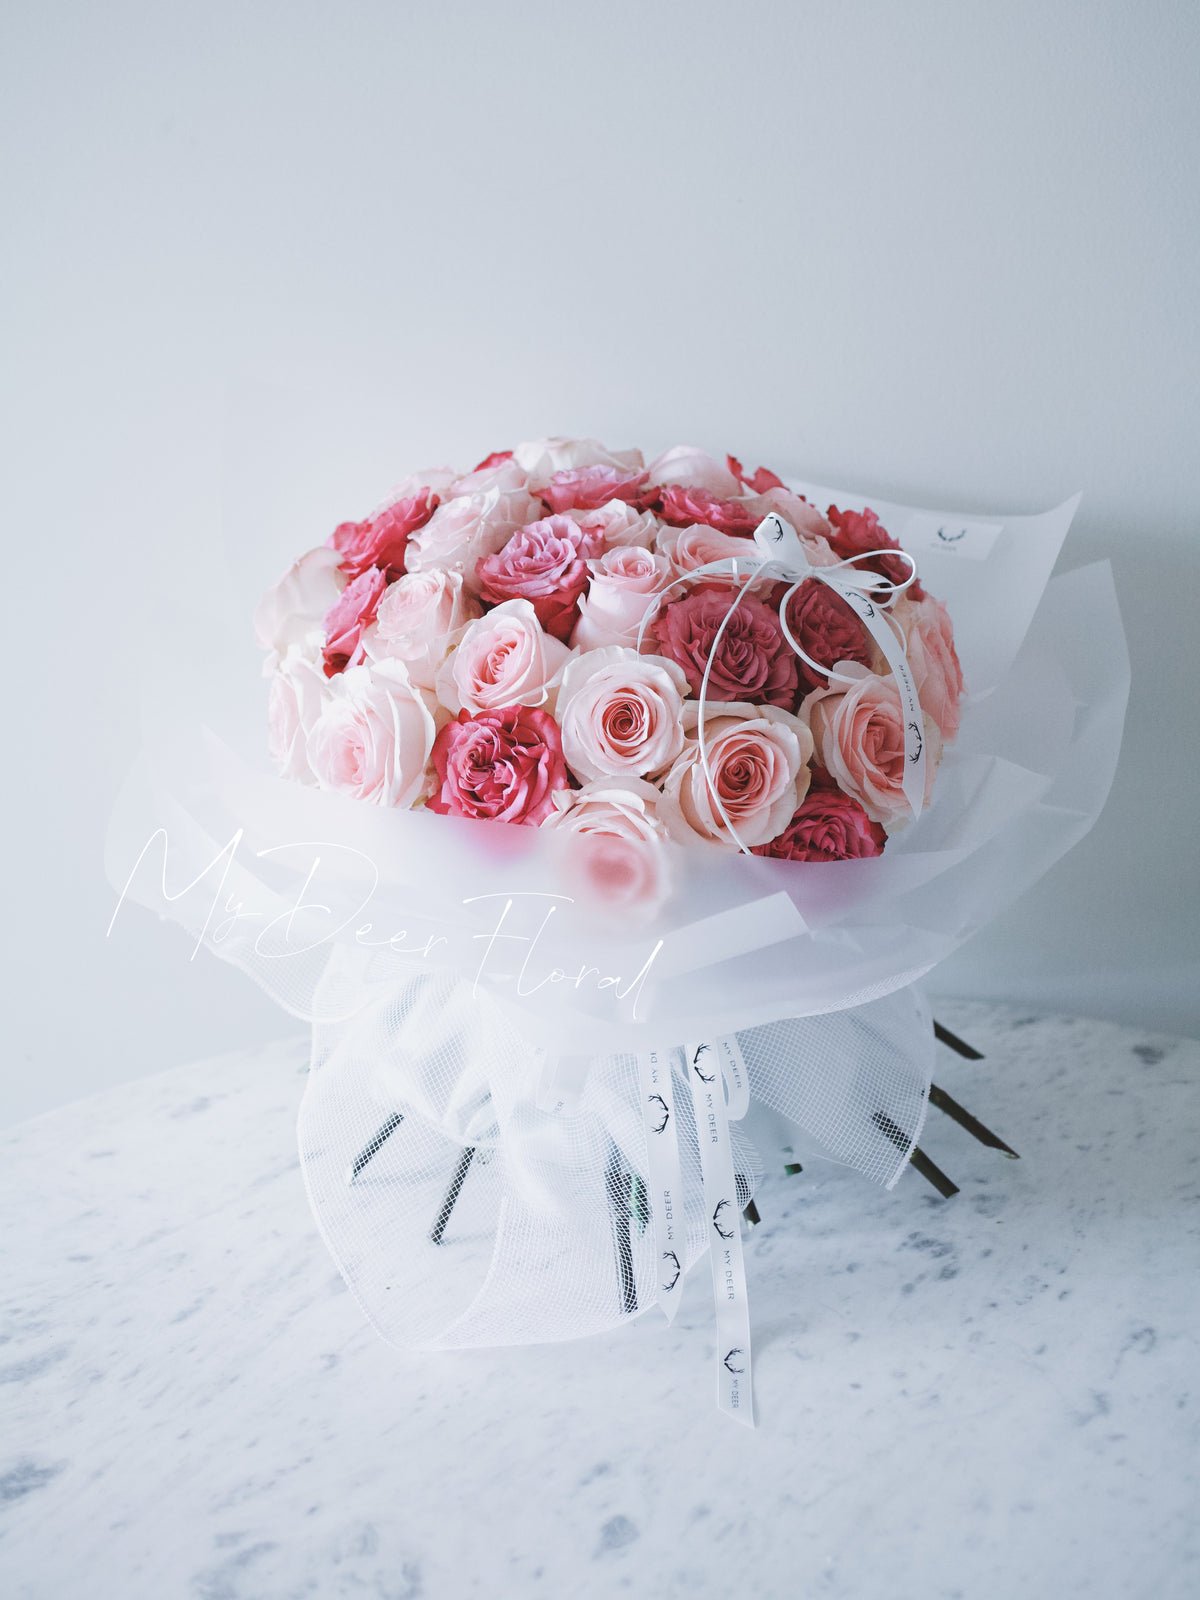 拼色玫瑰花束 | Mixed Roses Bouquet